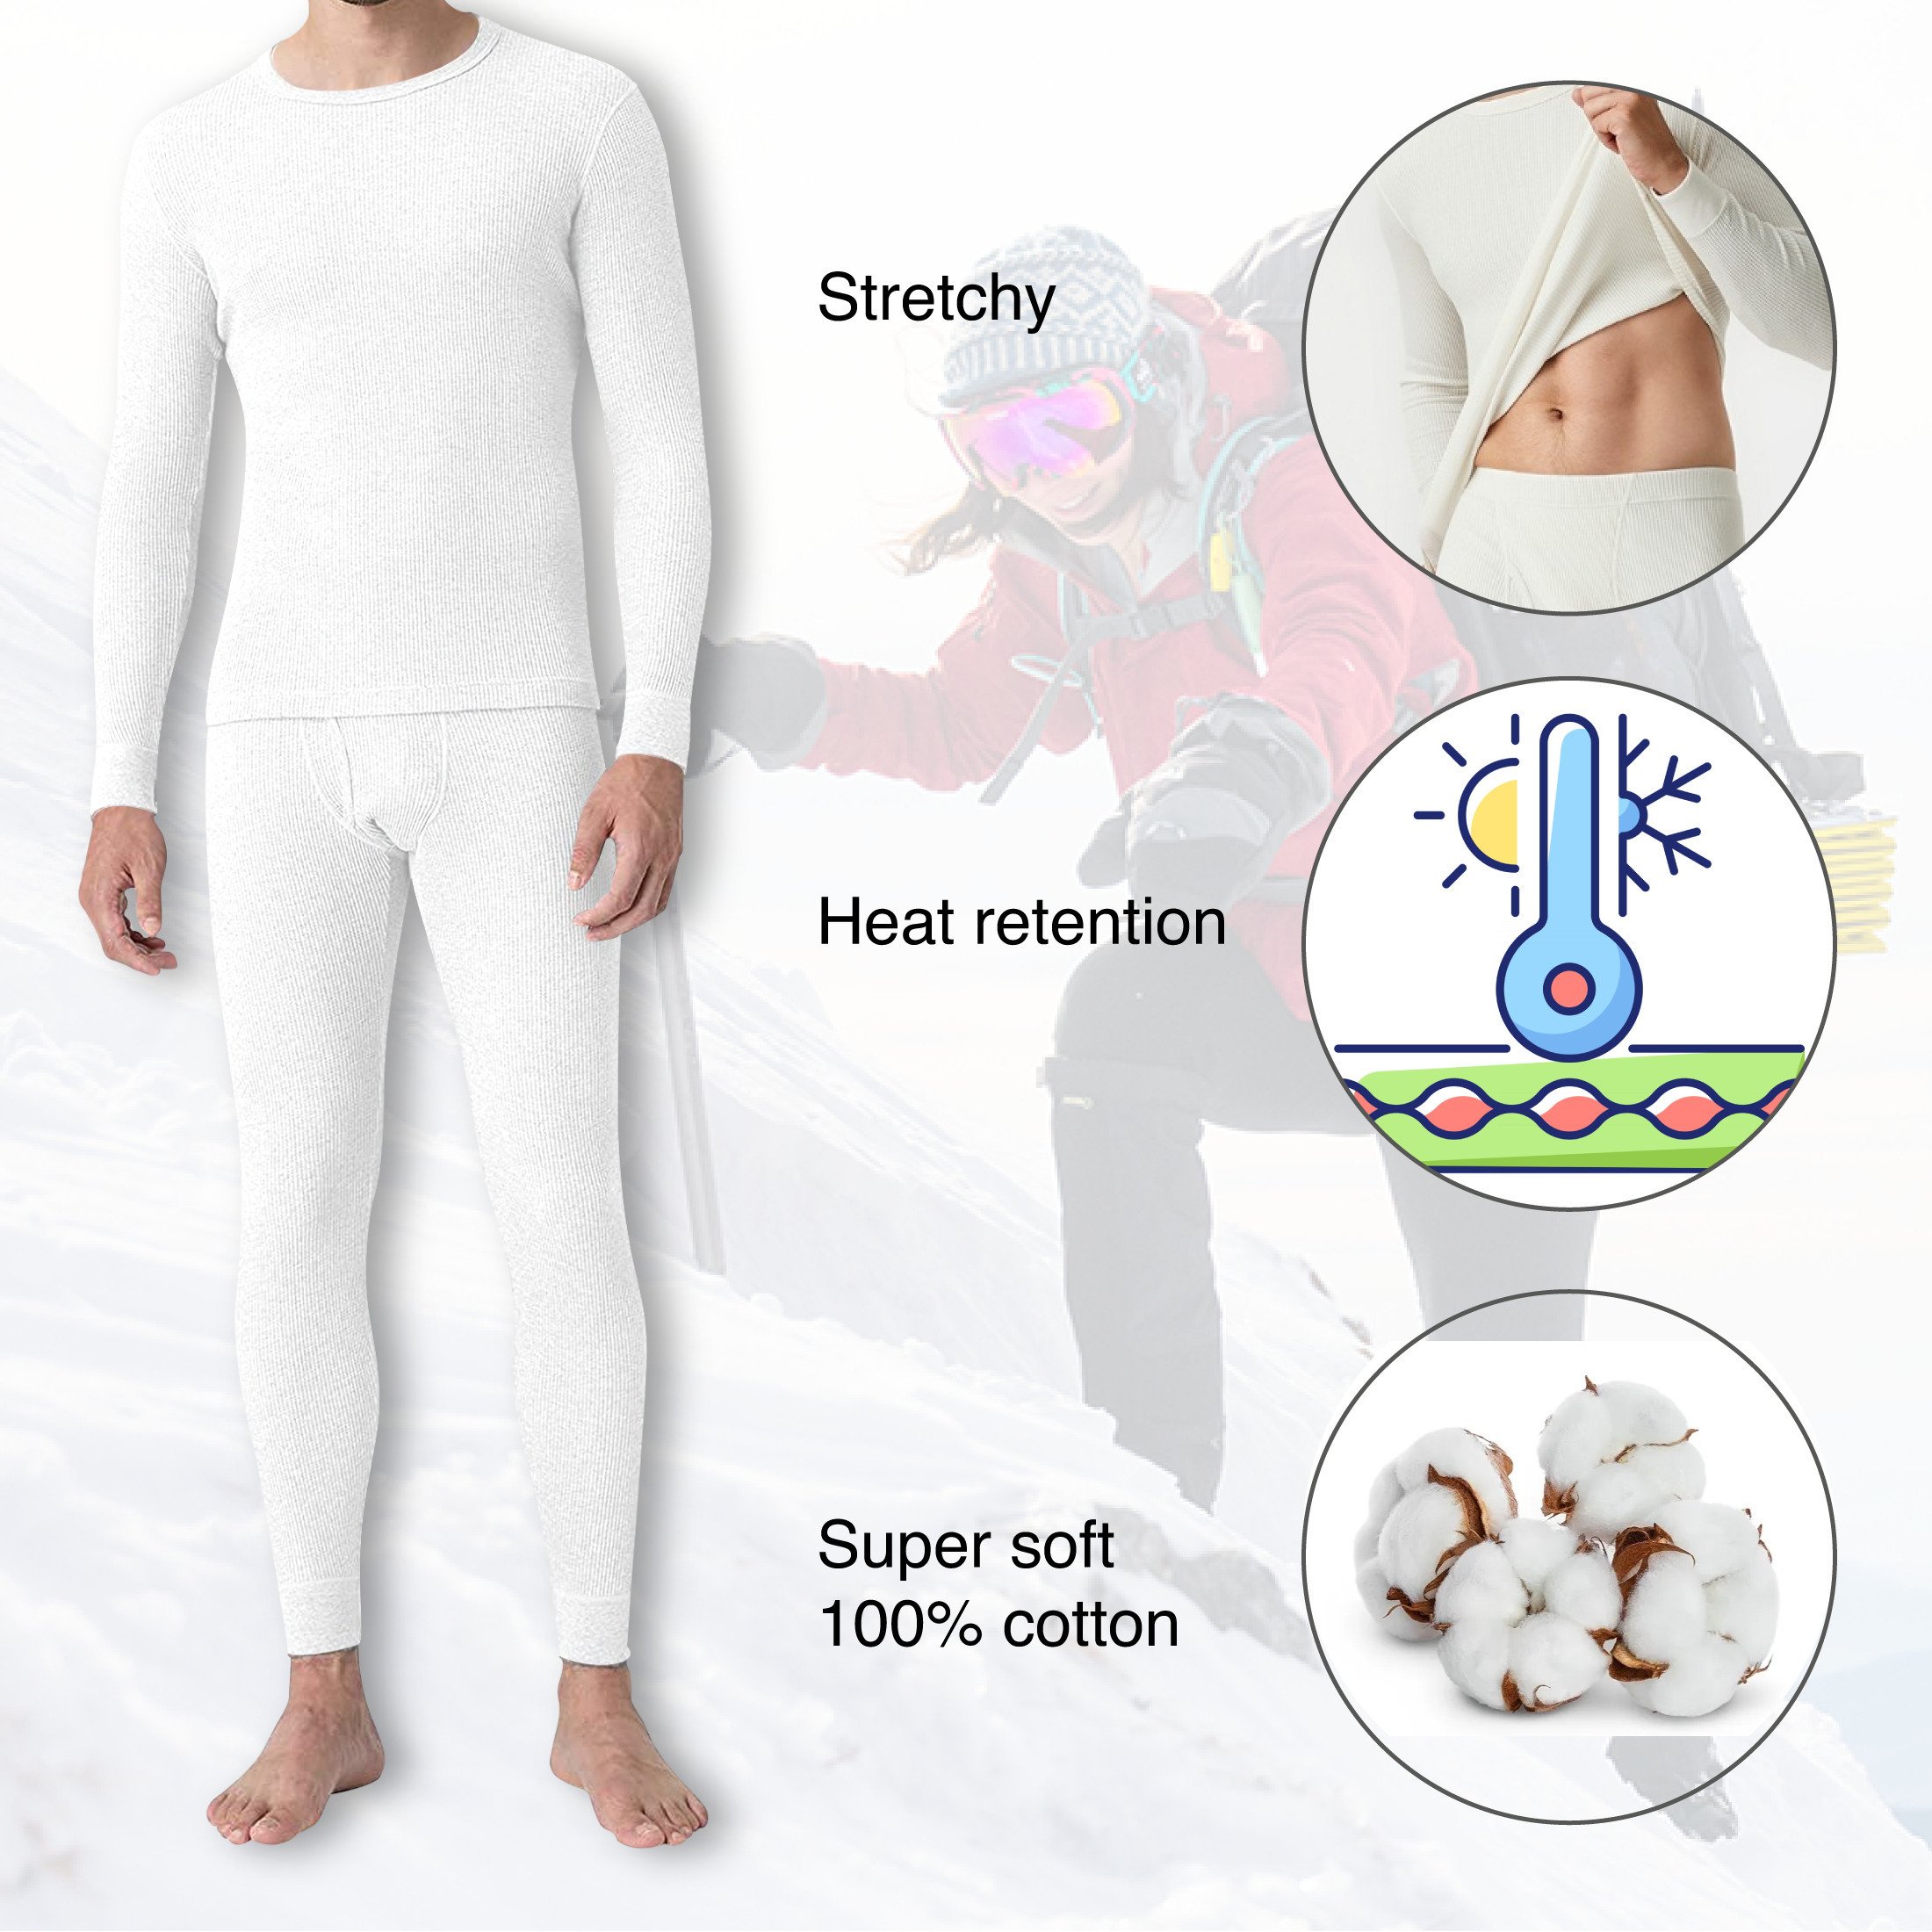 2-Sets: Men's Super Soft Cotton Waffle Knit Winter Thermal Underwear Set - Grey & Grey, 2X-Large